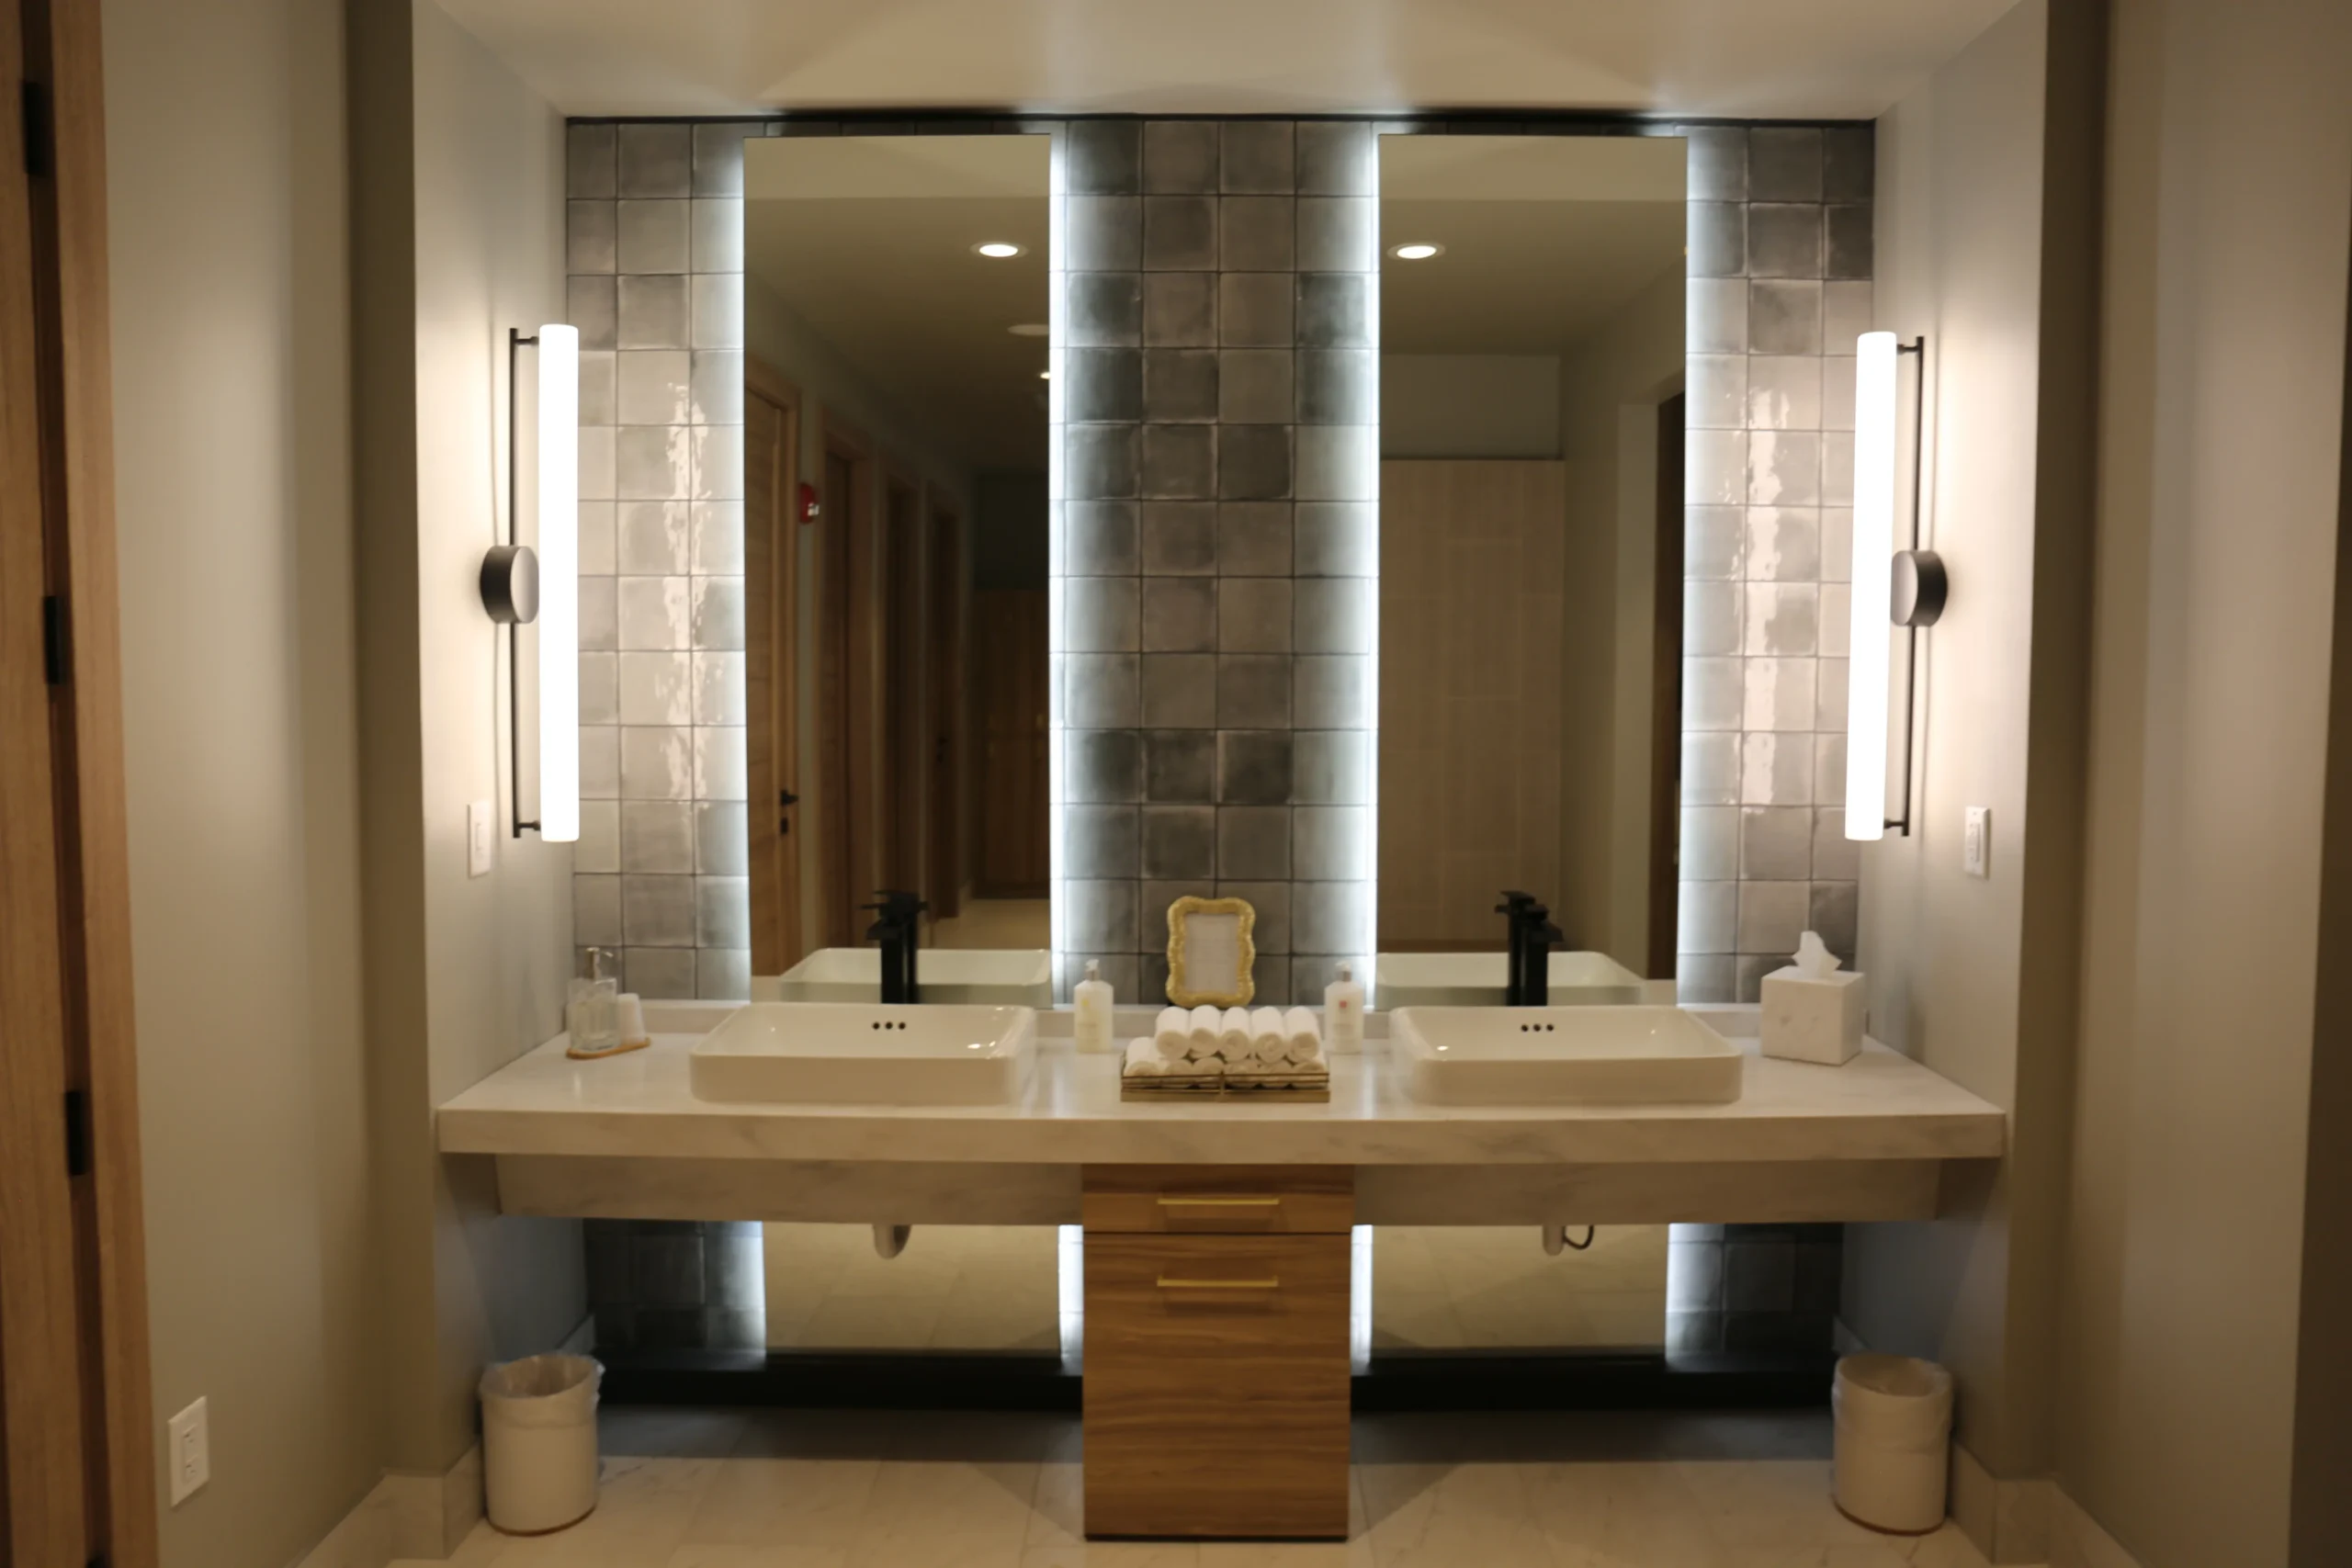 Commercial Millwork and fixtures - bathroom vanity.